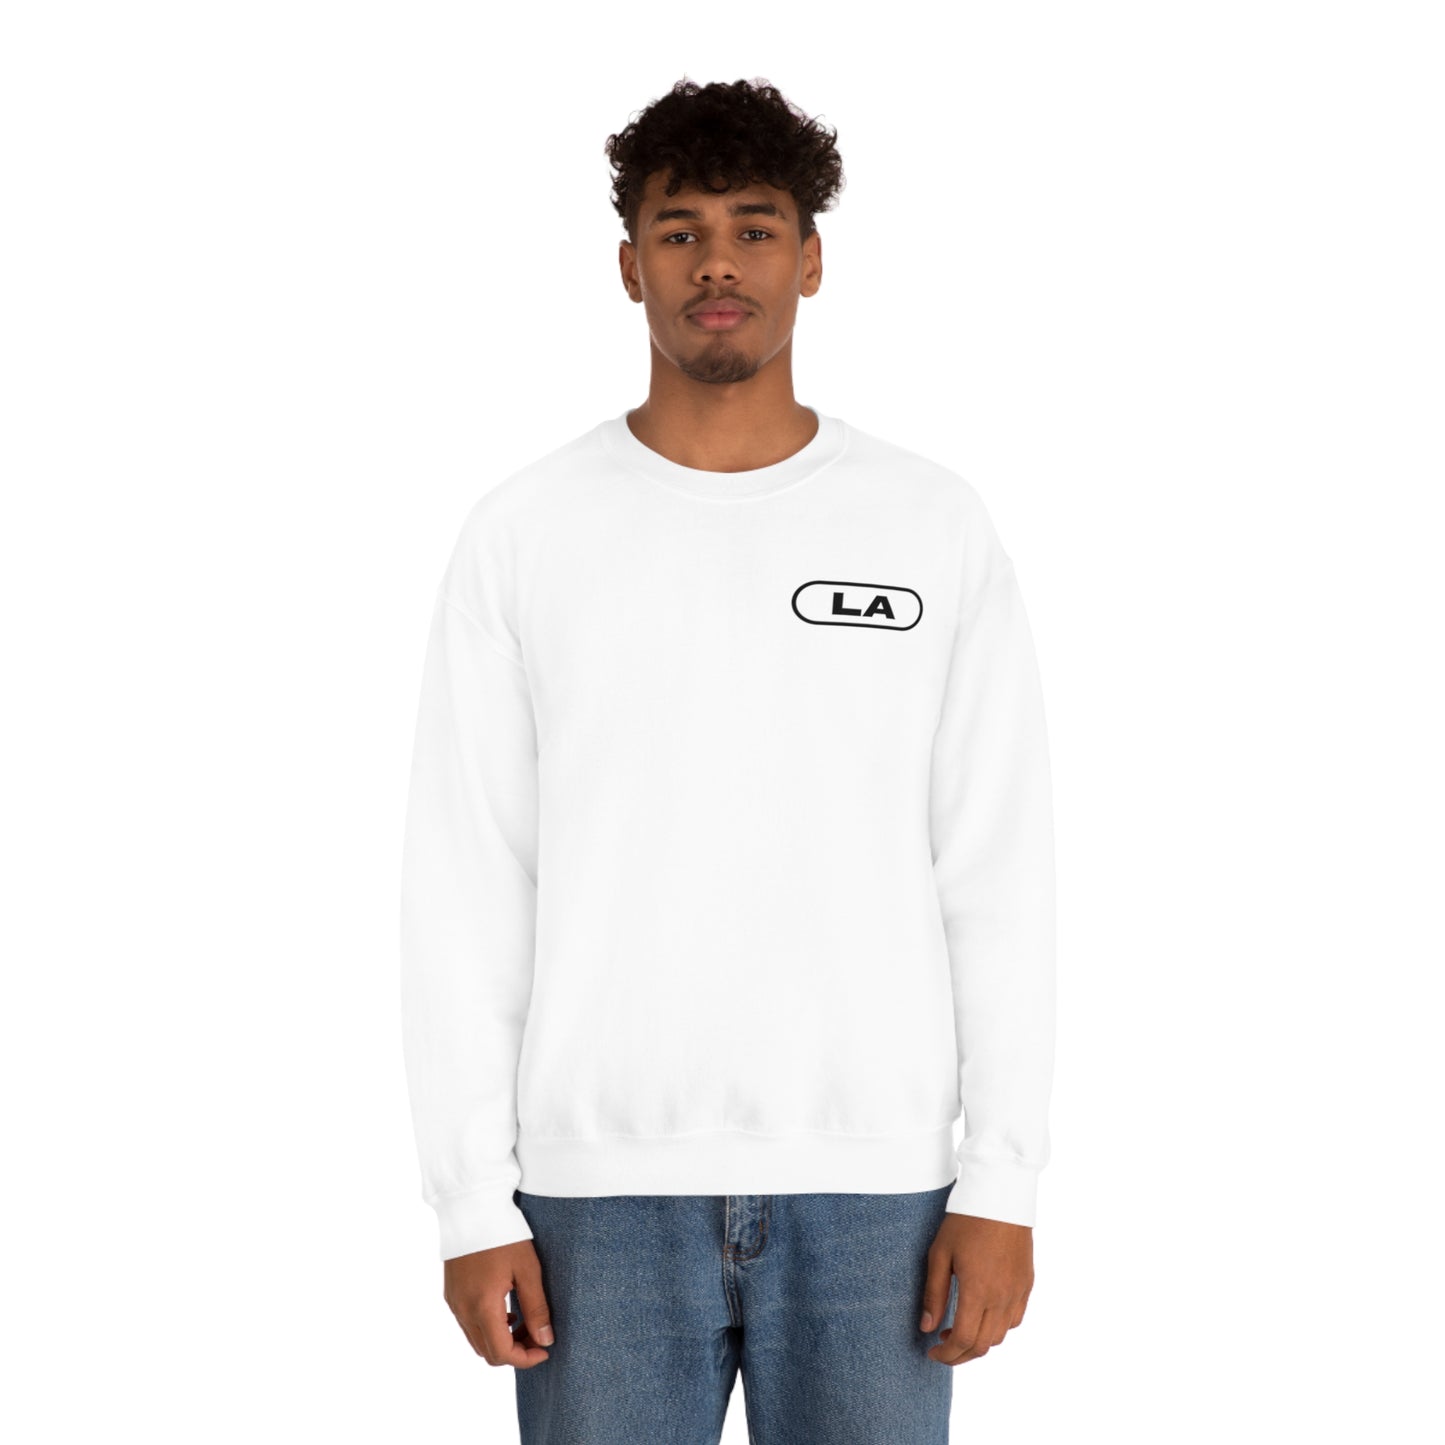 LA Crewneck Sweatshirt